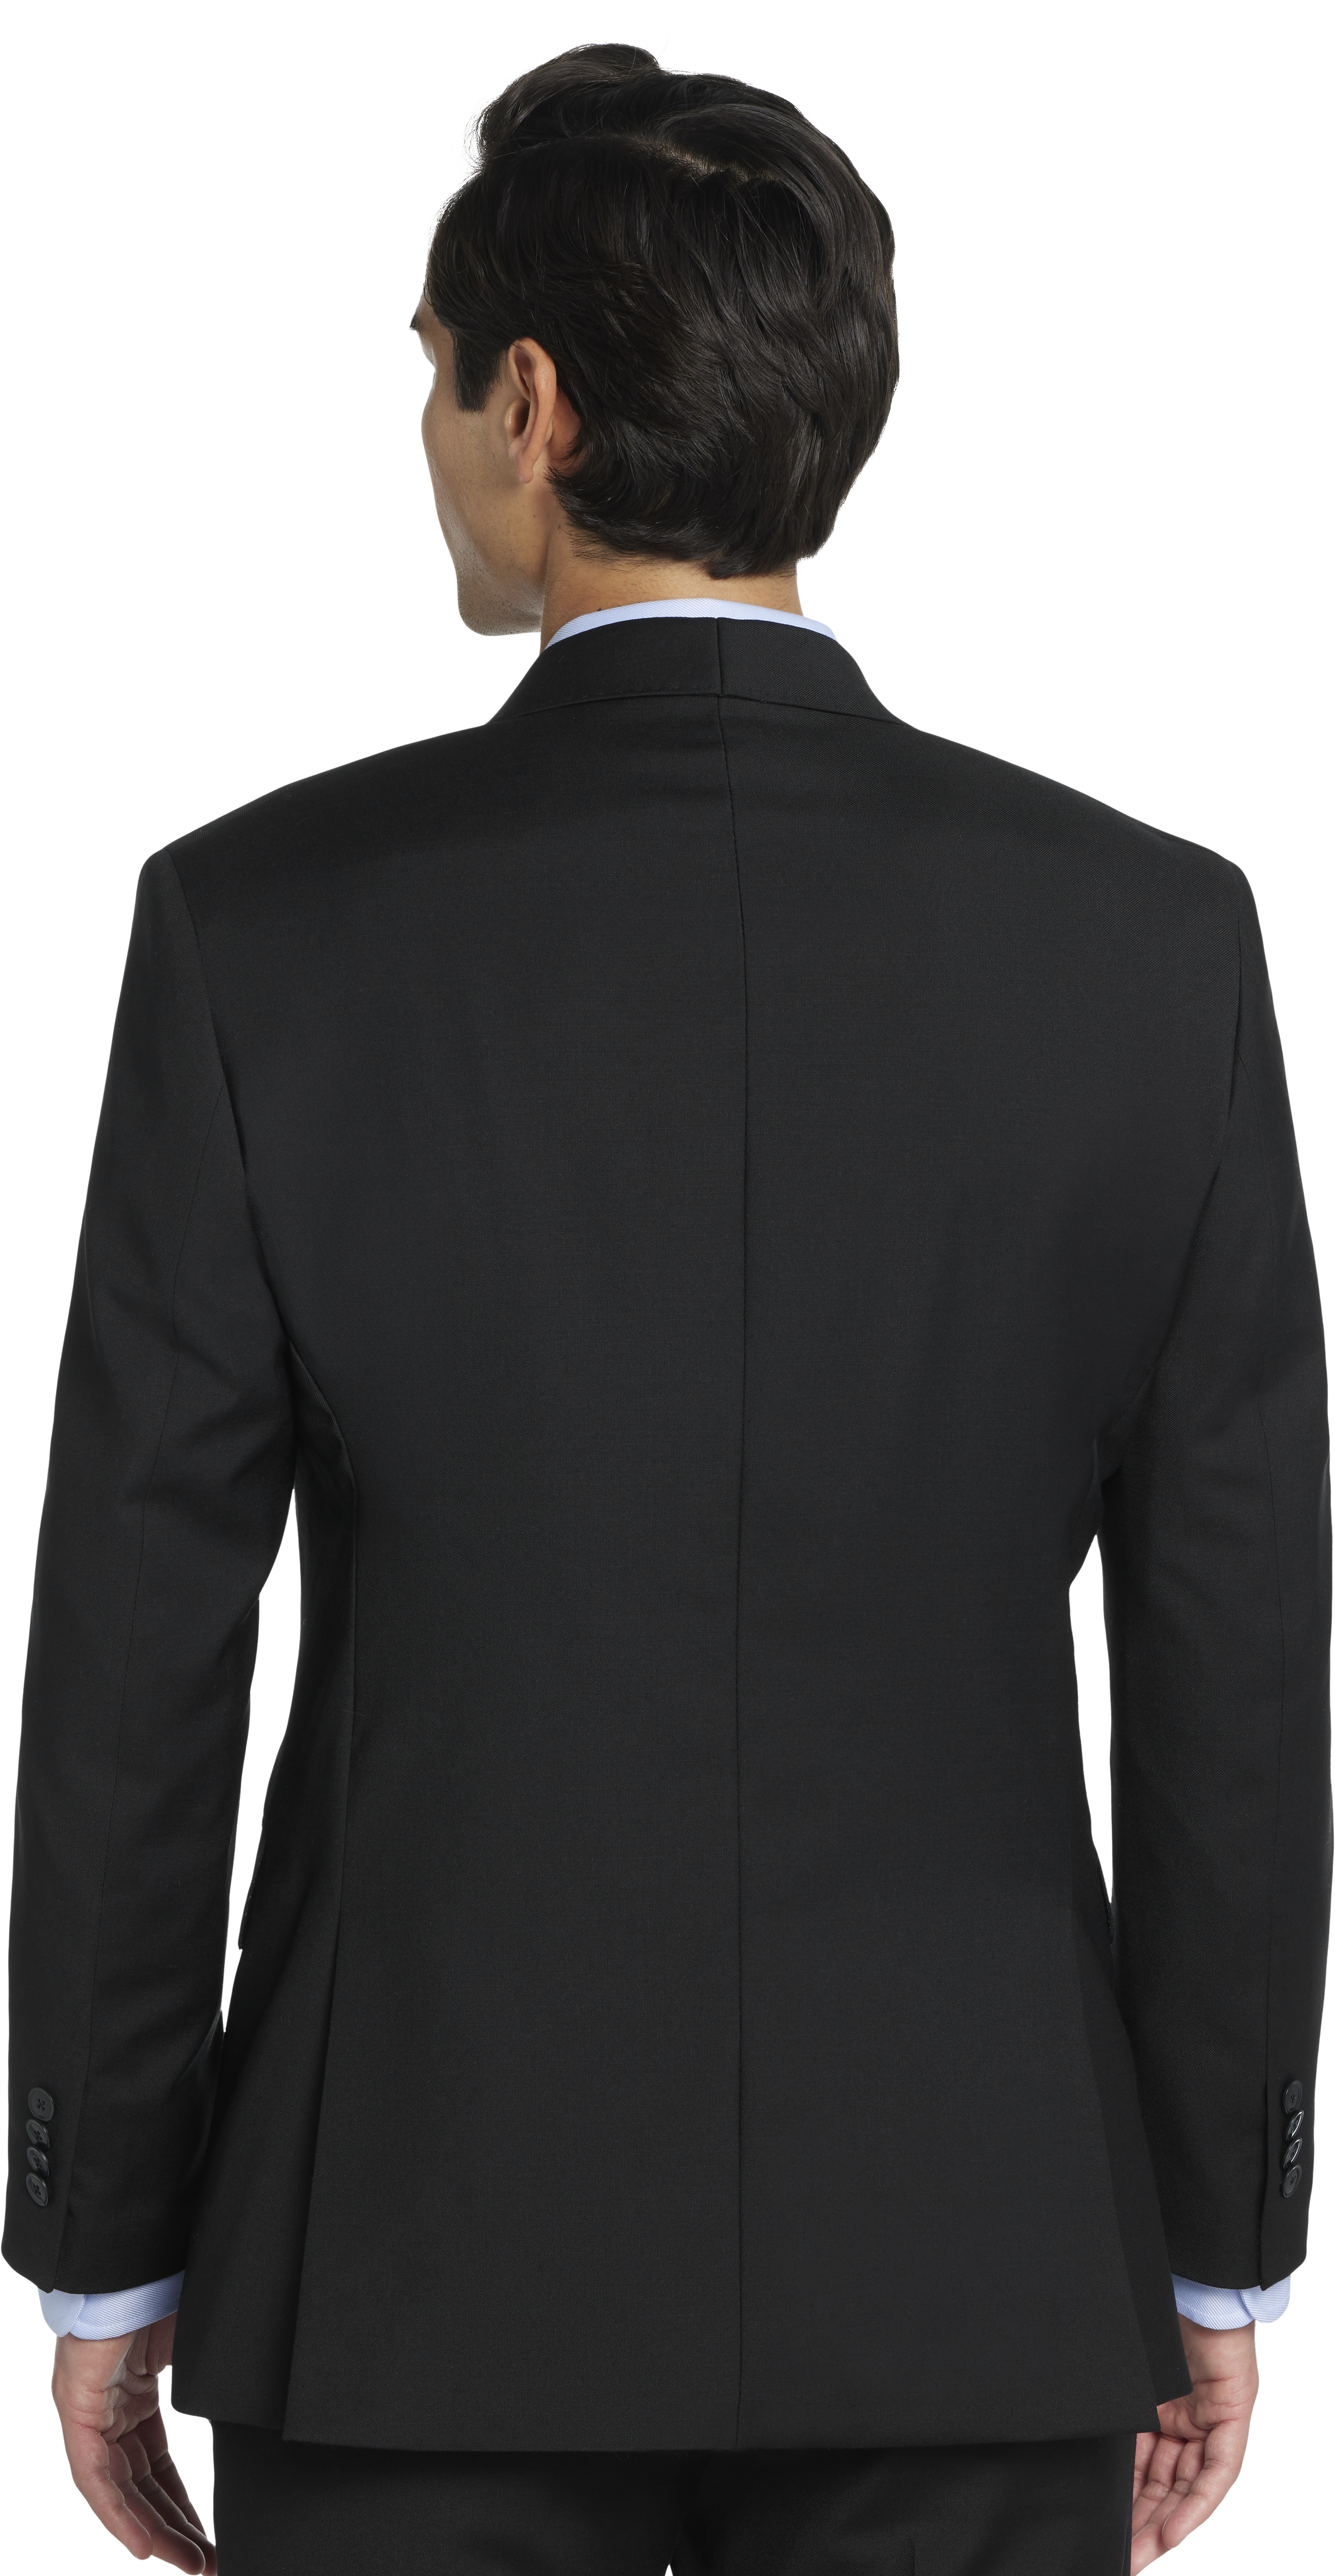 Slim Fit Peak Lapel Suit Separates Jacket